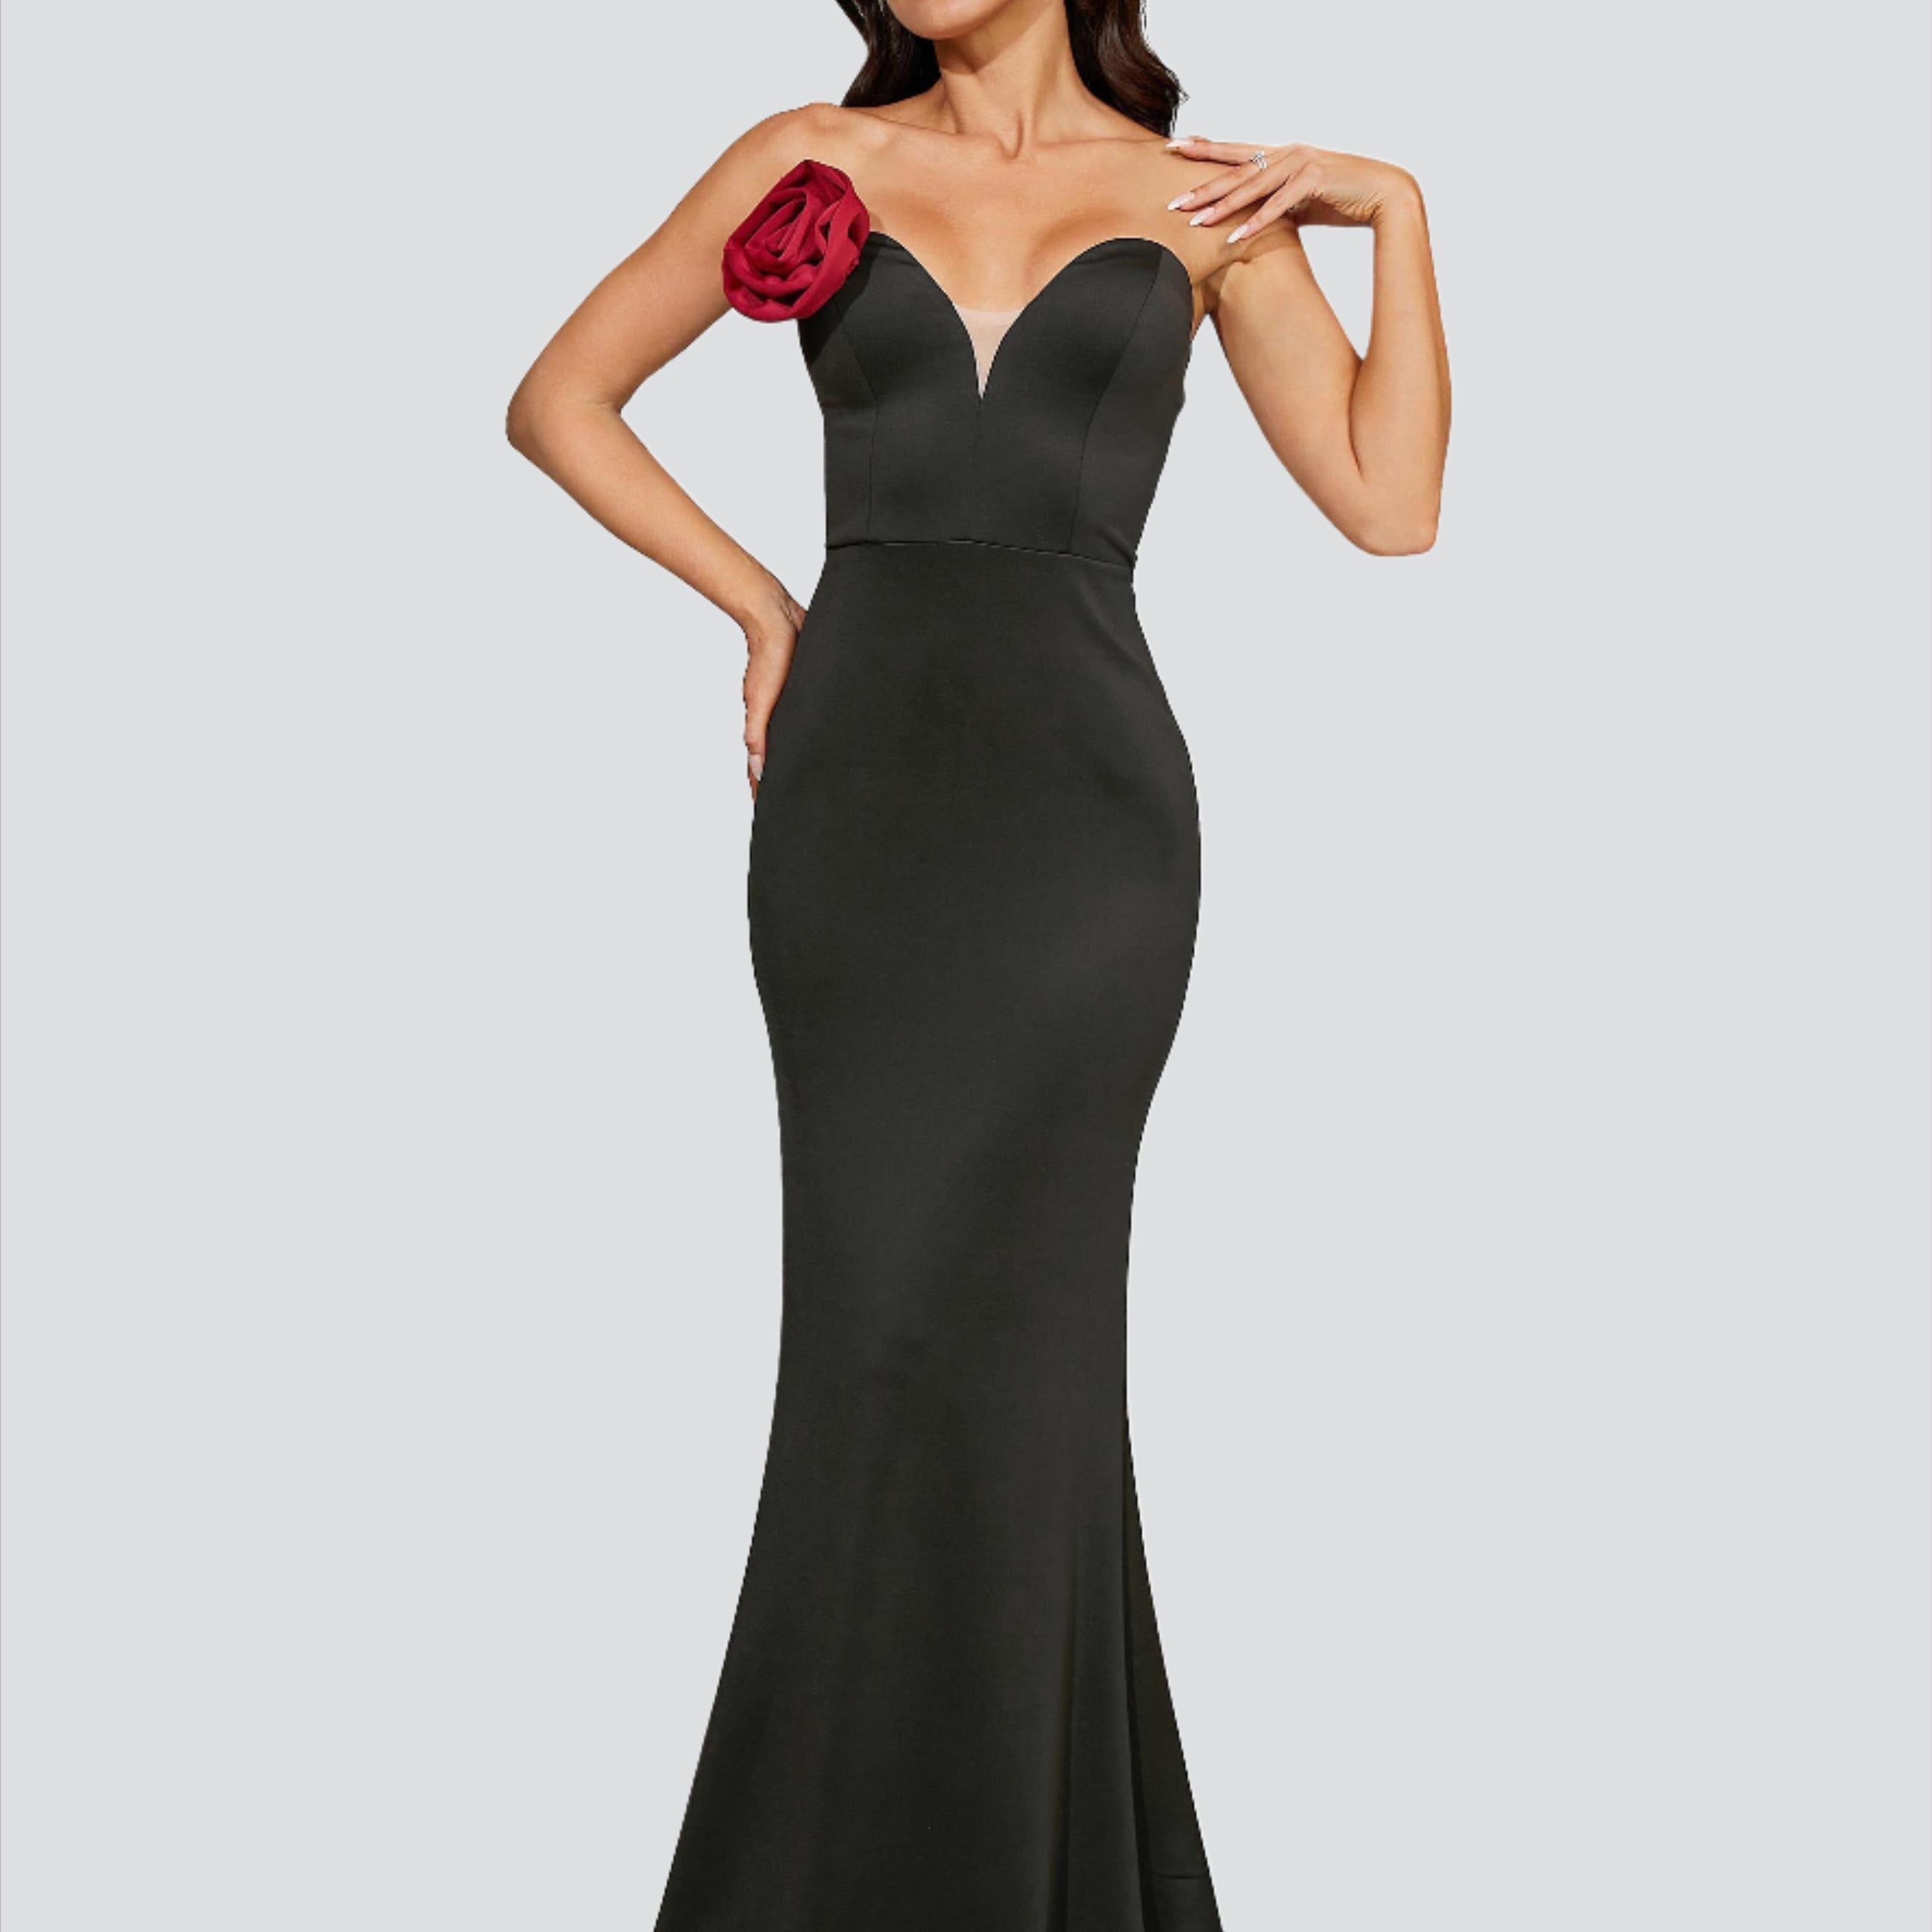 Appliqued Black Mermaid Evening Dress RJ10815